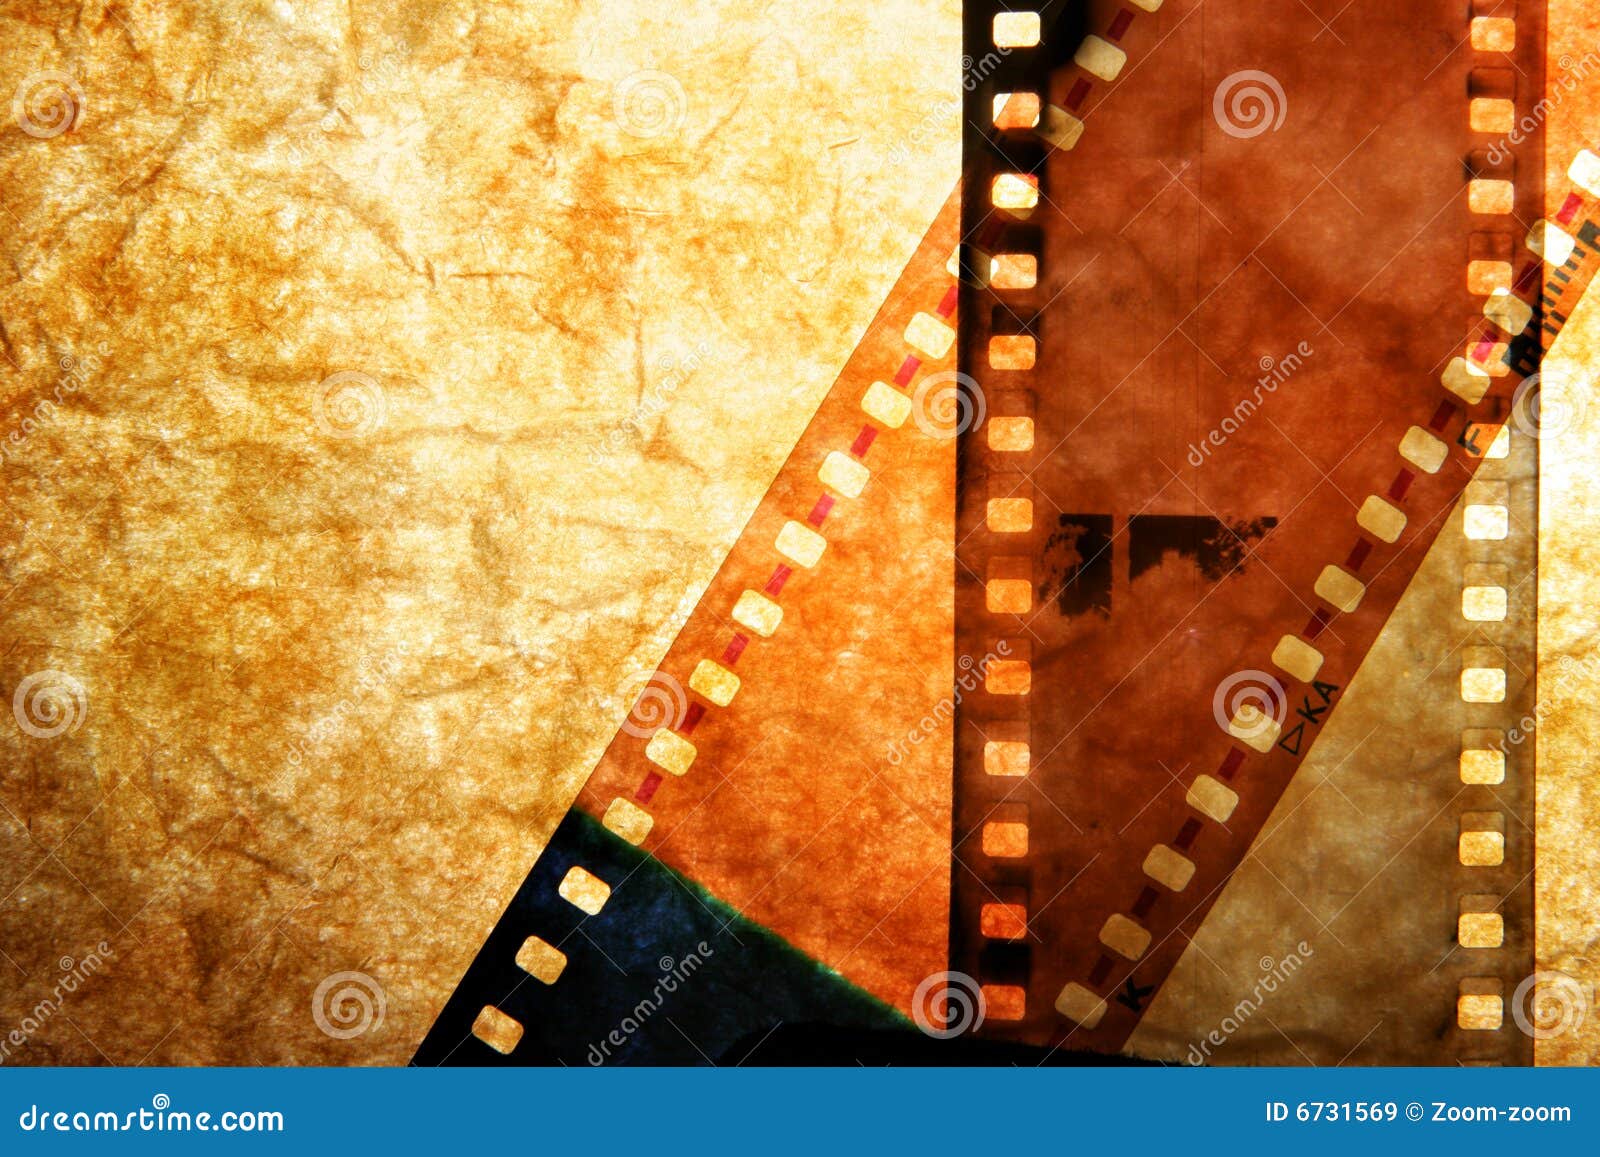 processed film strips